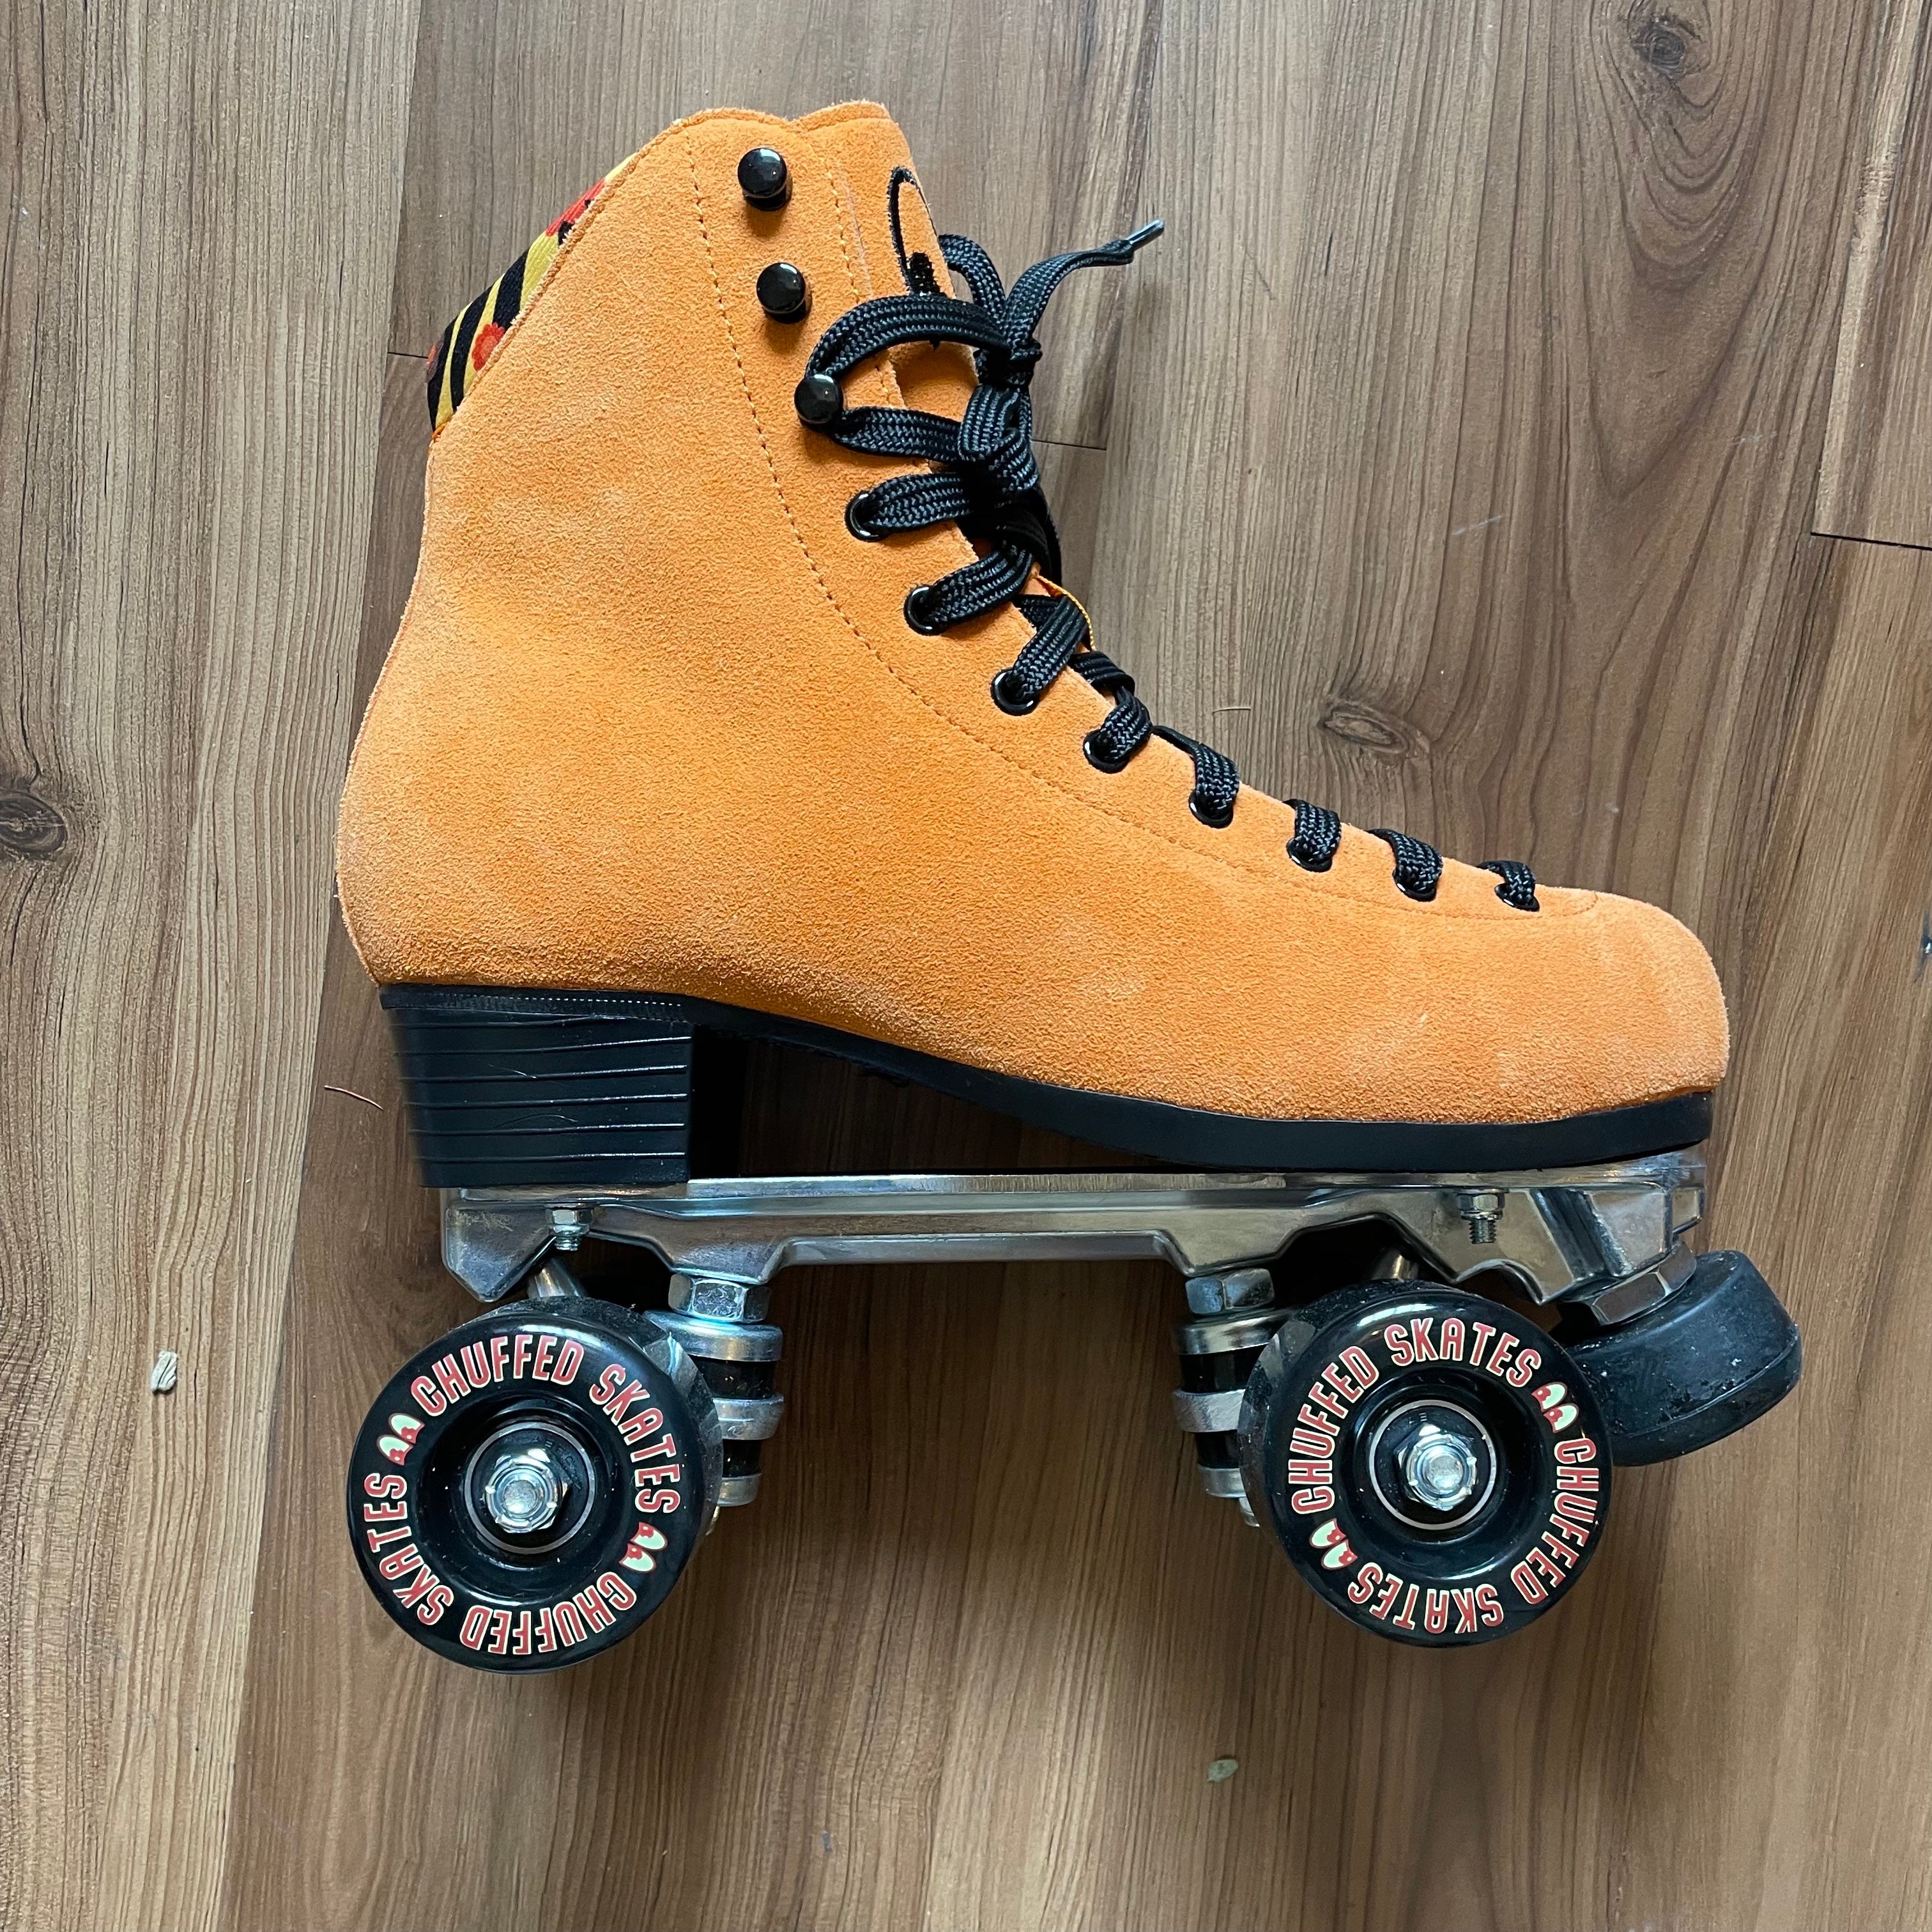 CHUFFED - Orange Wild Thing Roller Skates